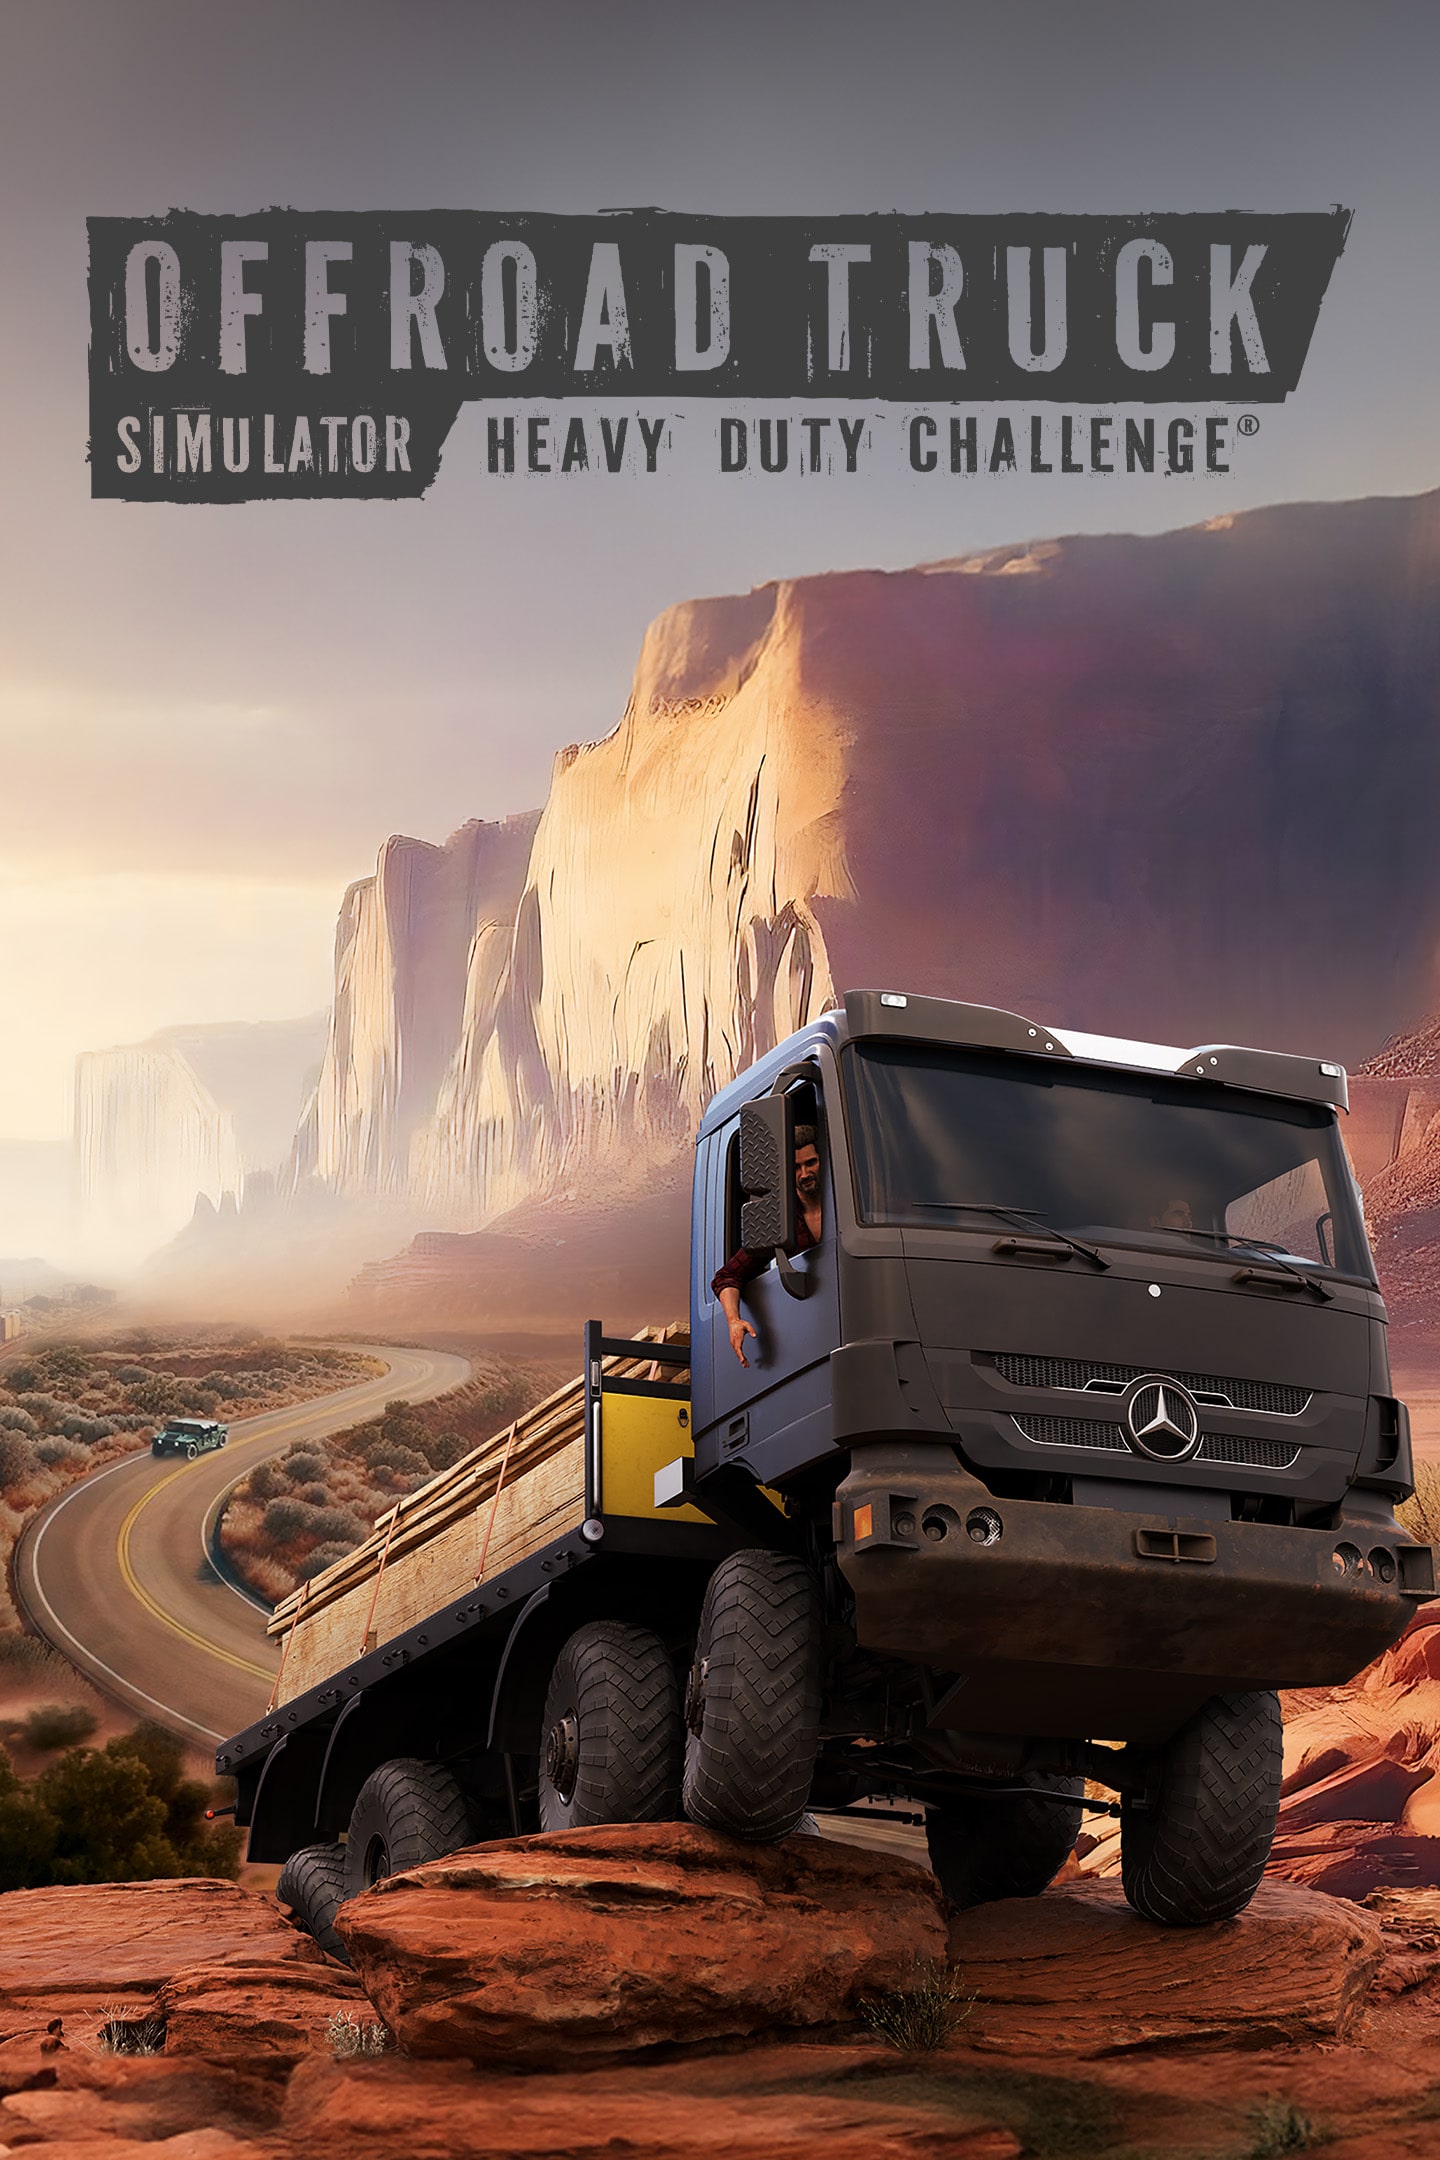 Offroad Truck Simulator: Heavy Duty Challenge® (English)